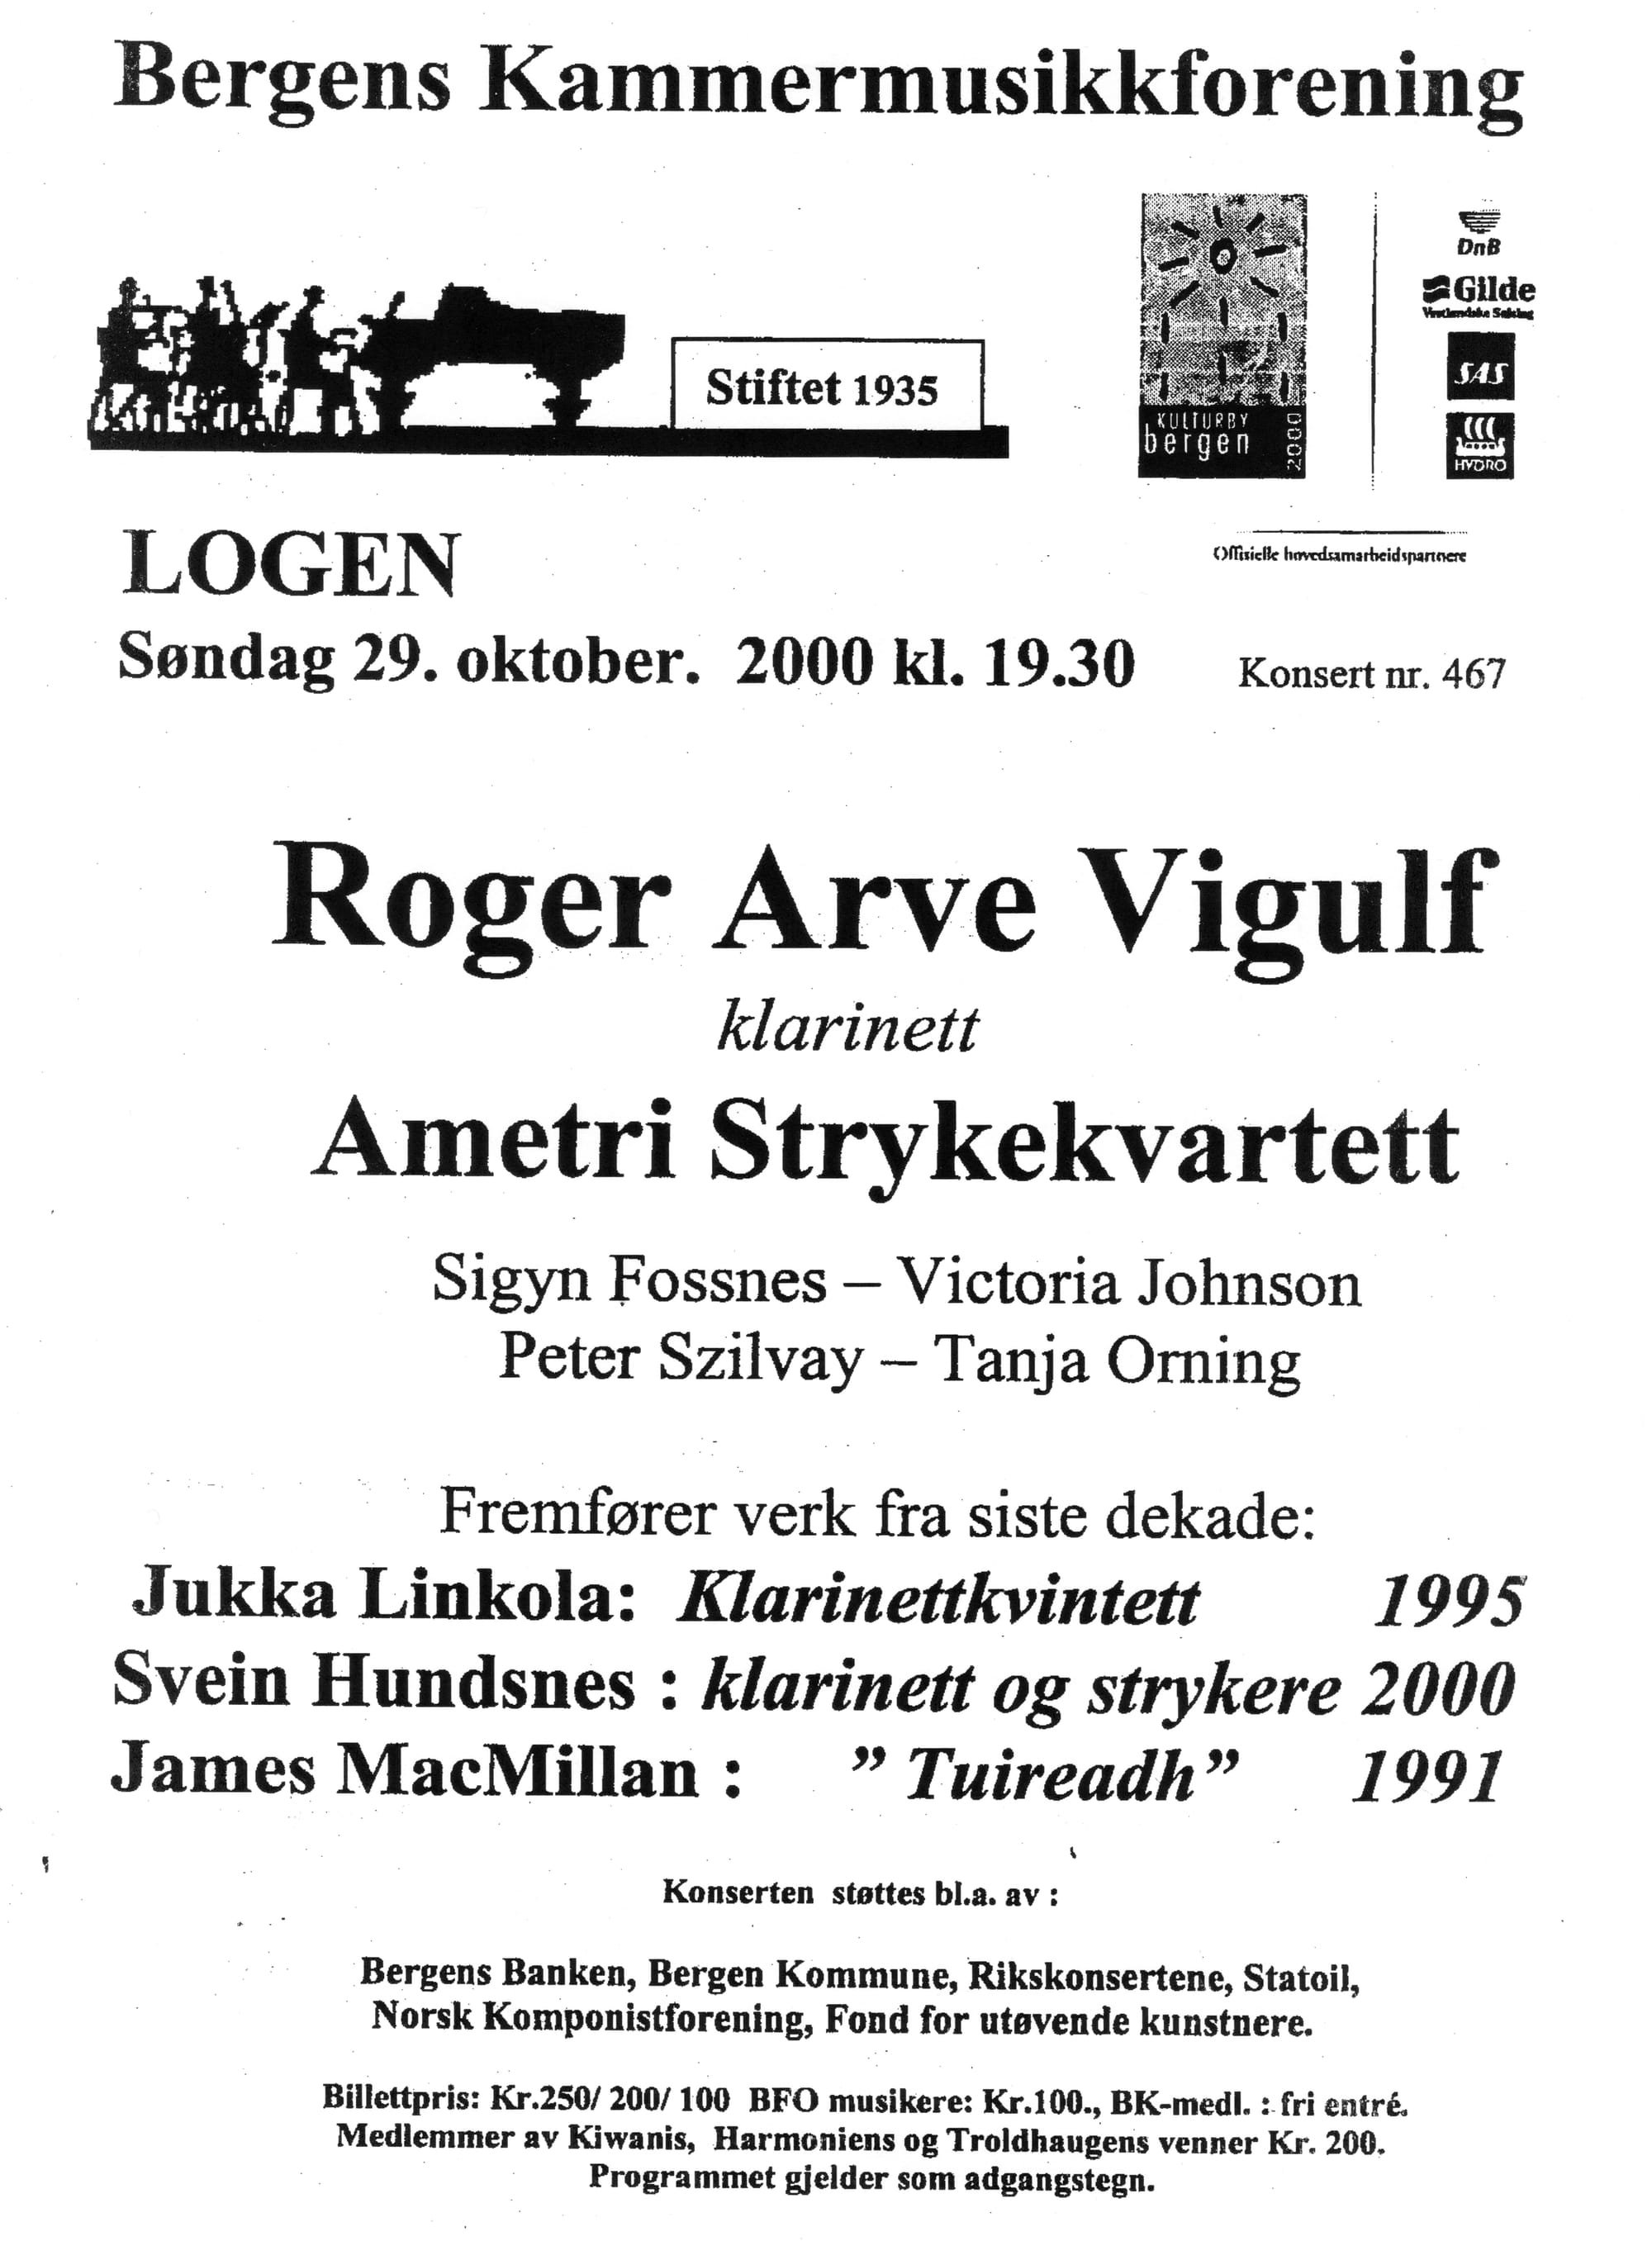 Vigulf - Ametri 2000